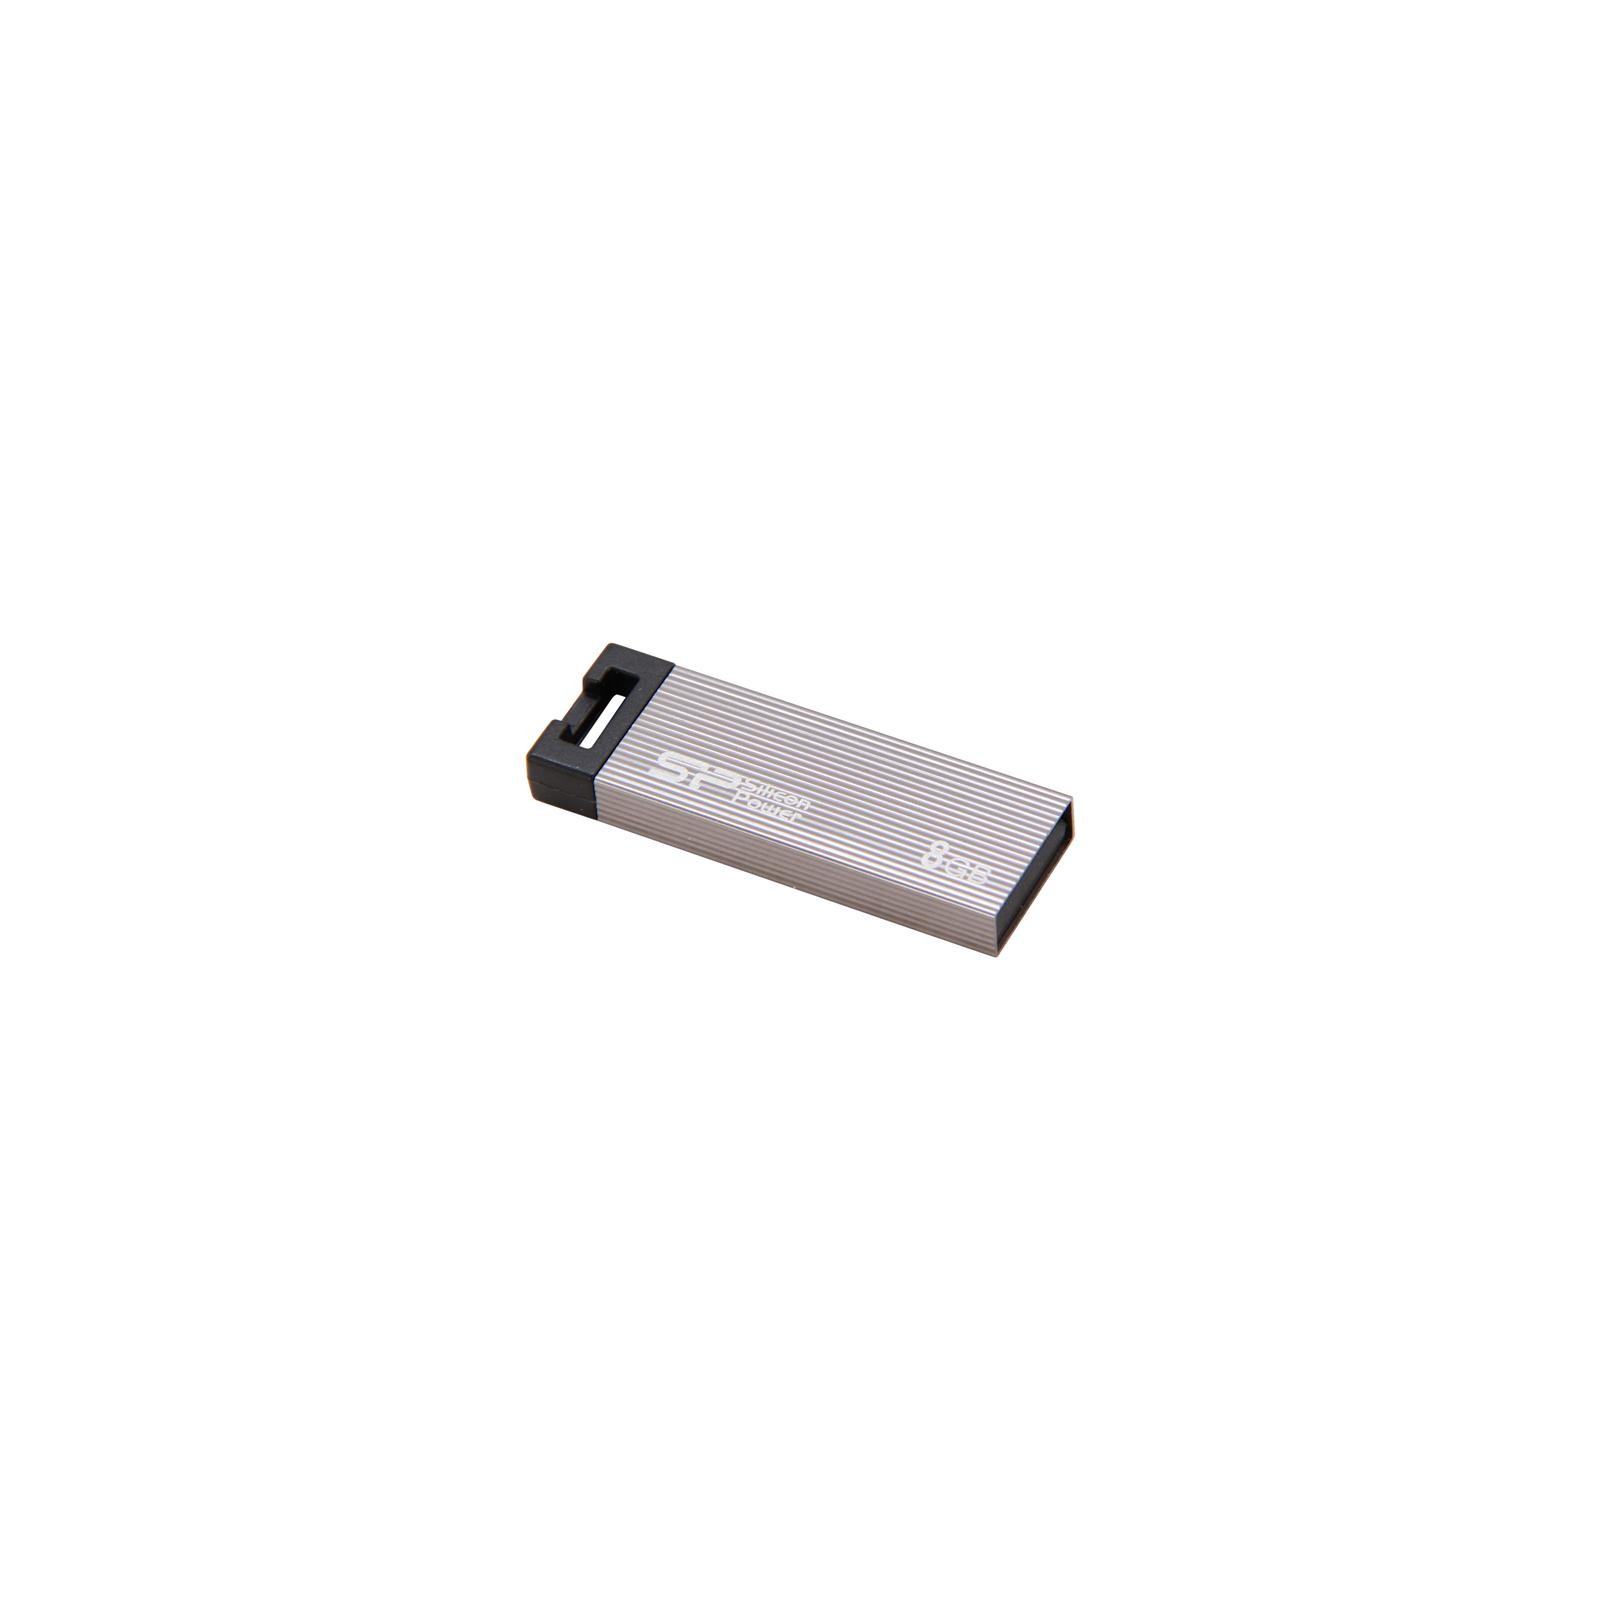 USB флеш накопитель Silicon Power 8GB Touch 835 USB 2.0 (SP008GBUF2835V1T / SP008GBUF2835V3T) изображение 3